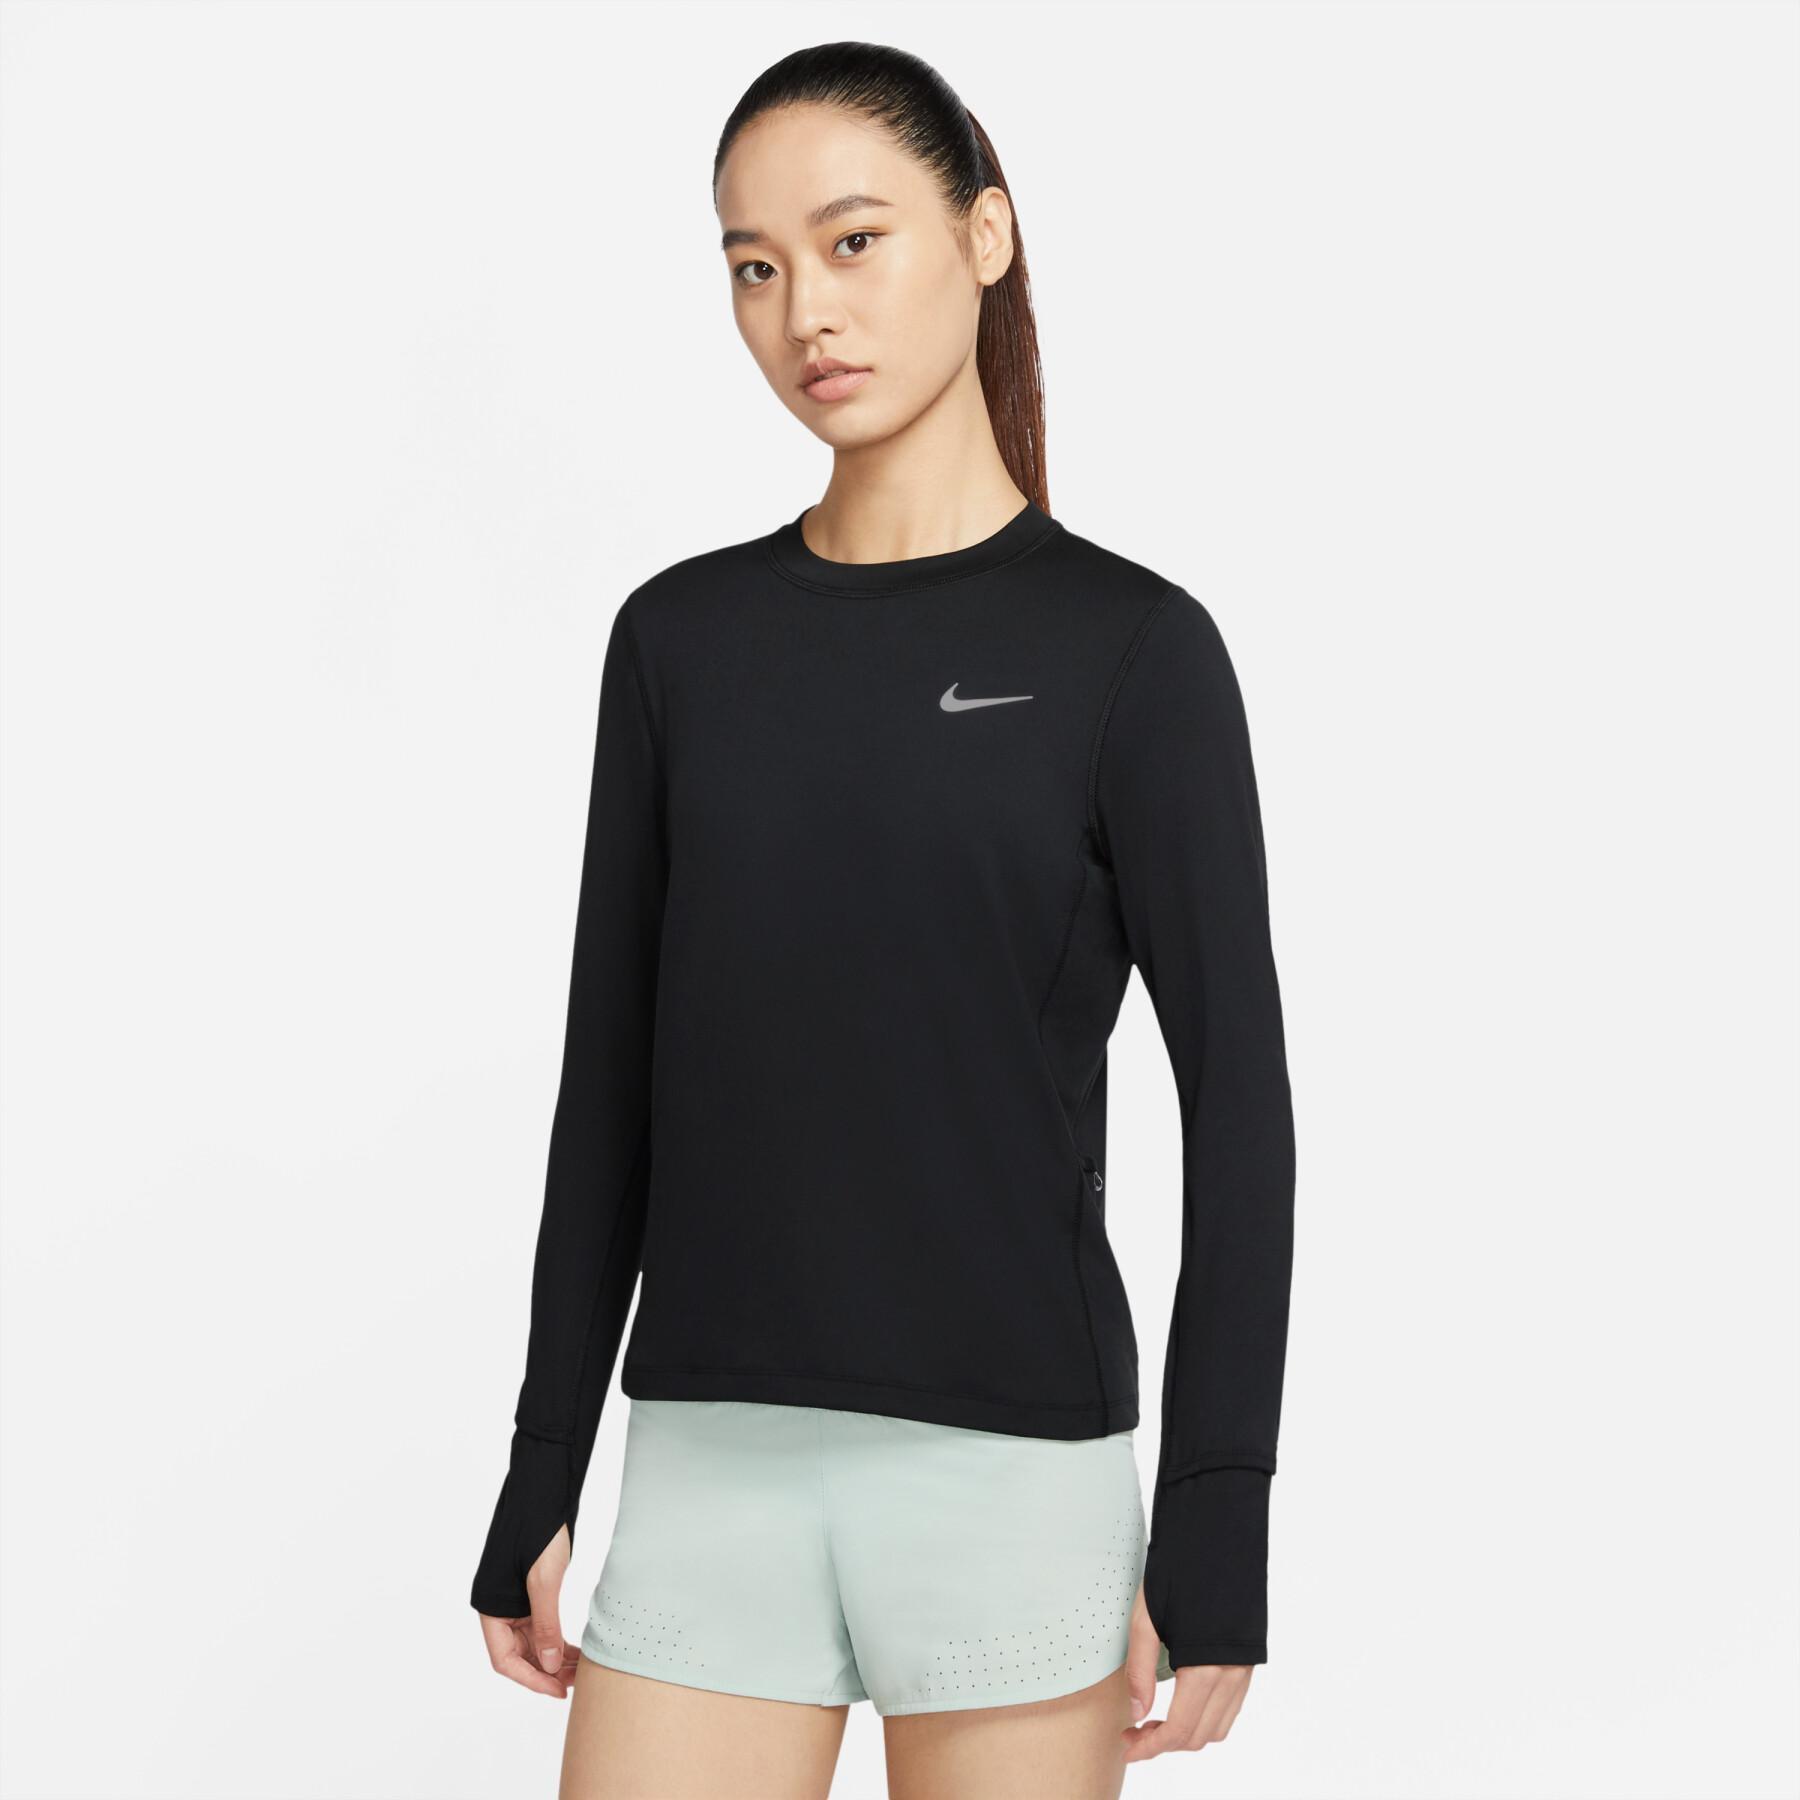 T-shirt femme Nike